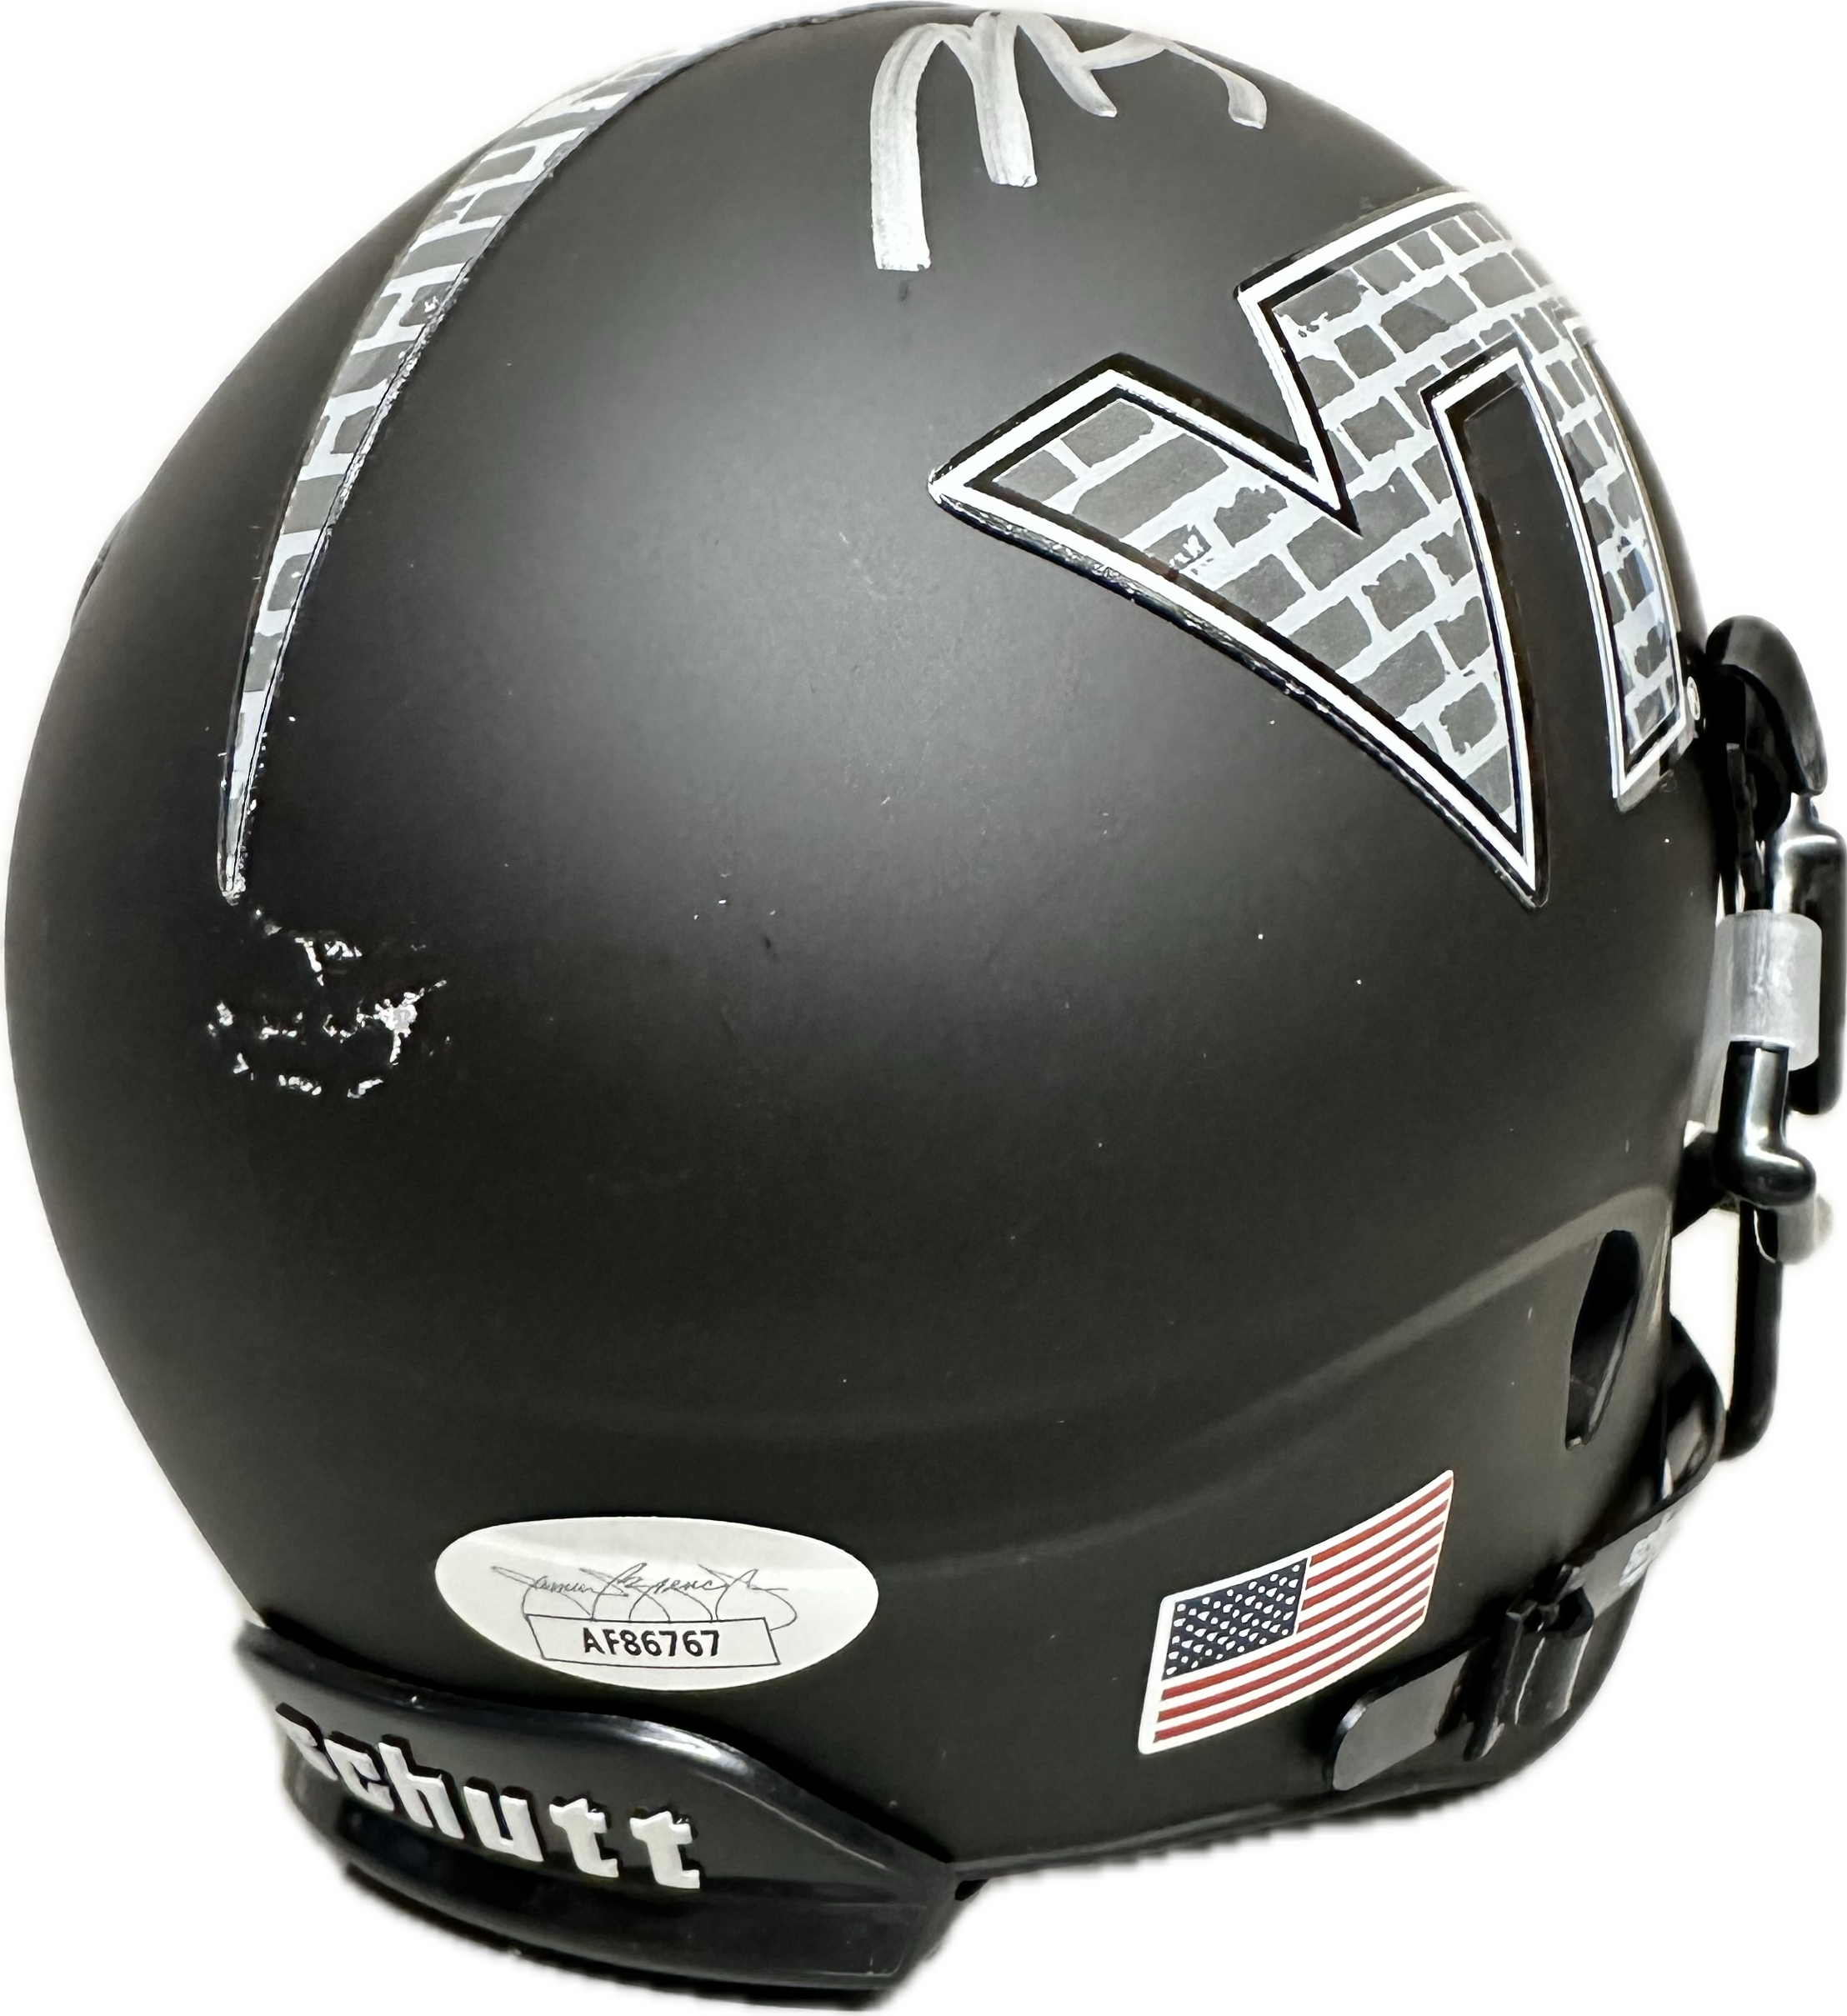 Michael Vick Virgina Tech Black Signed Mini Football Helmet (JSA)